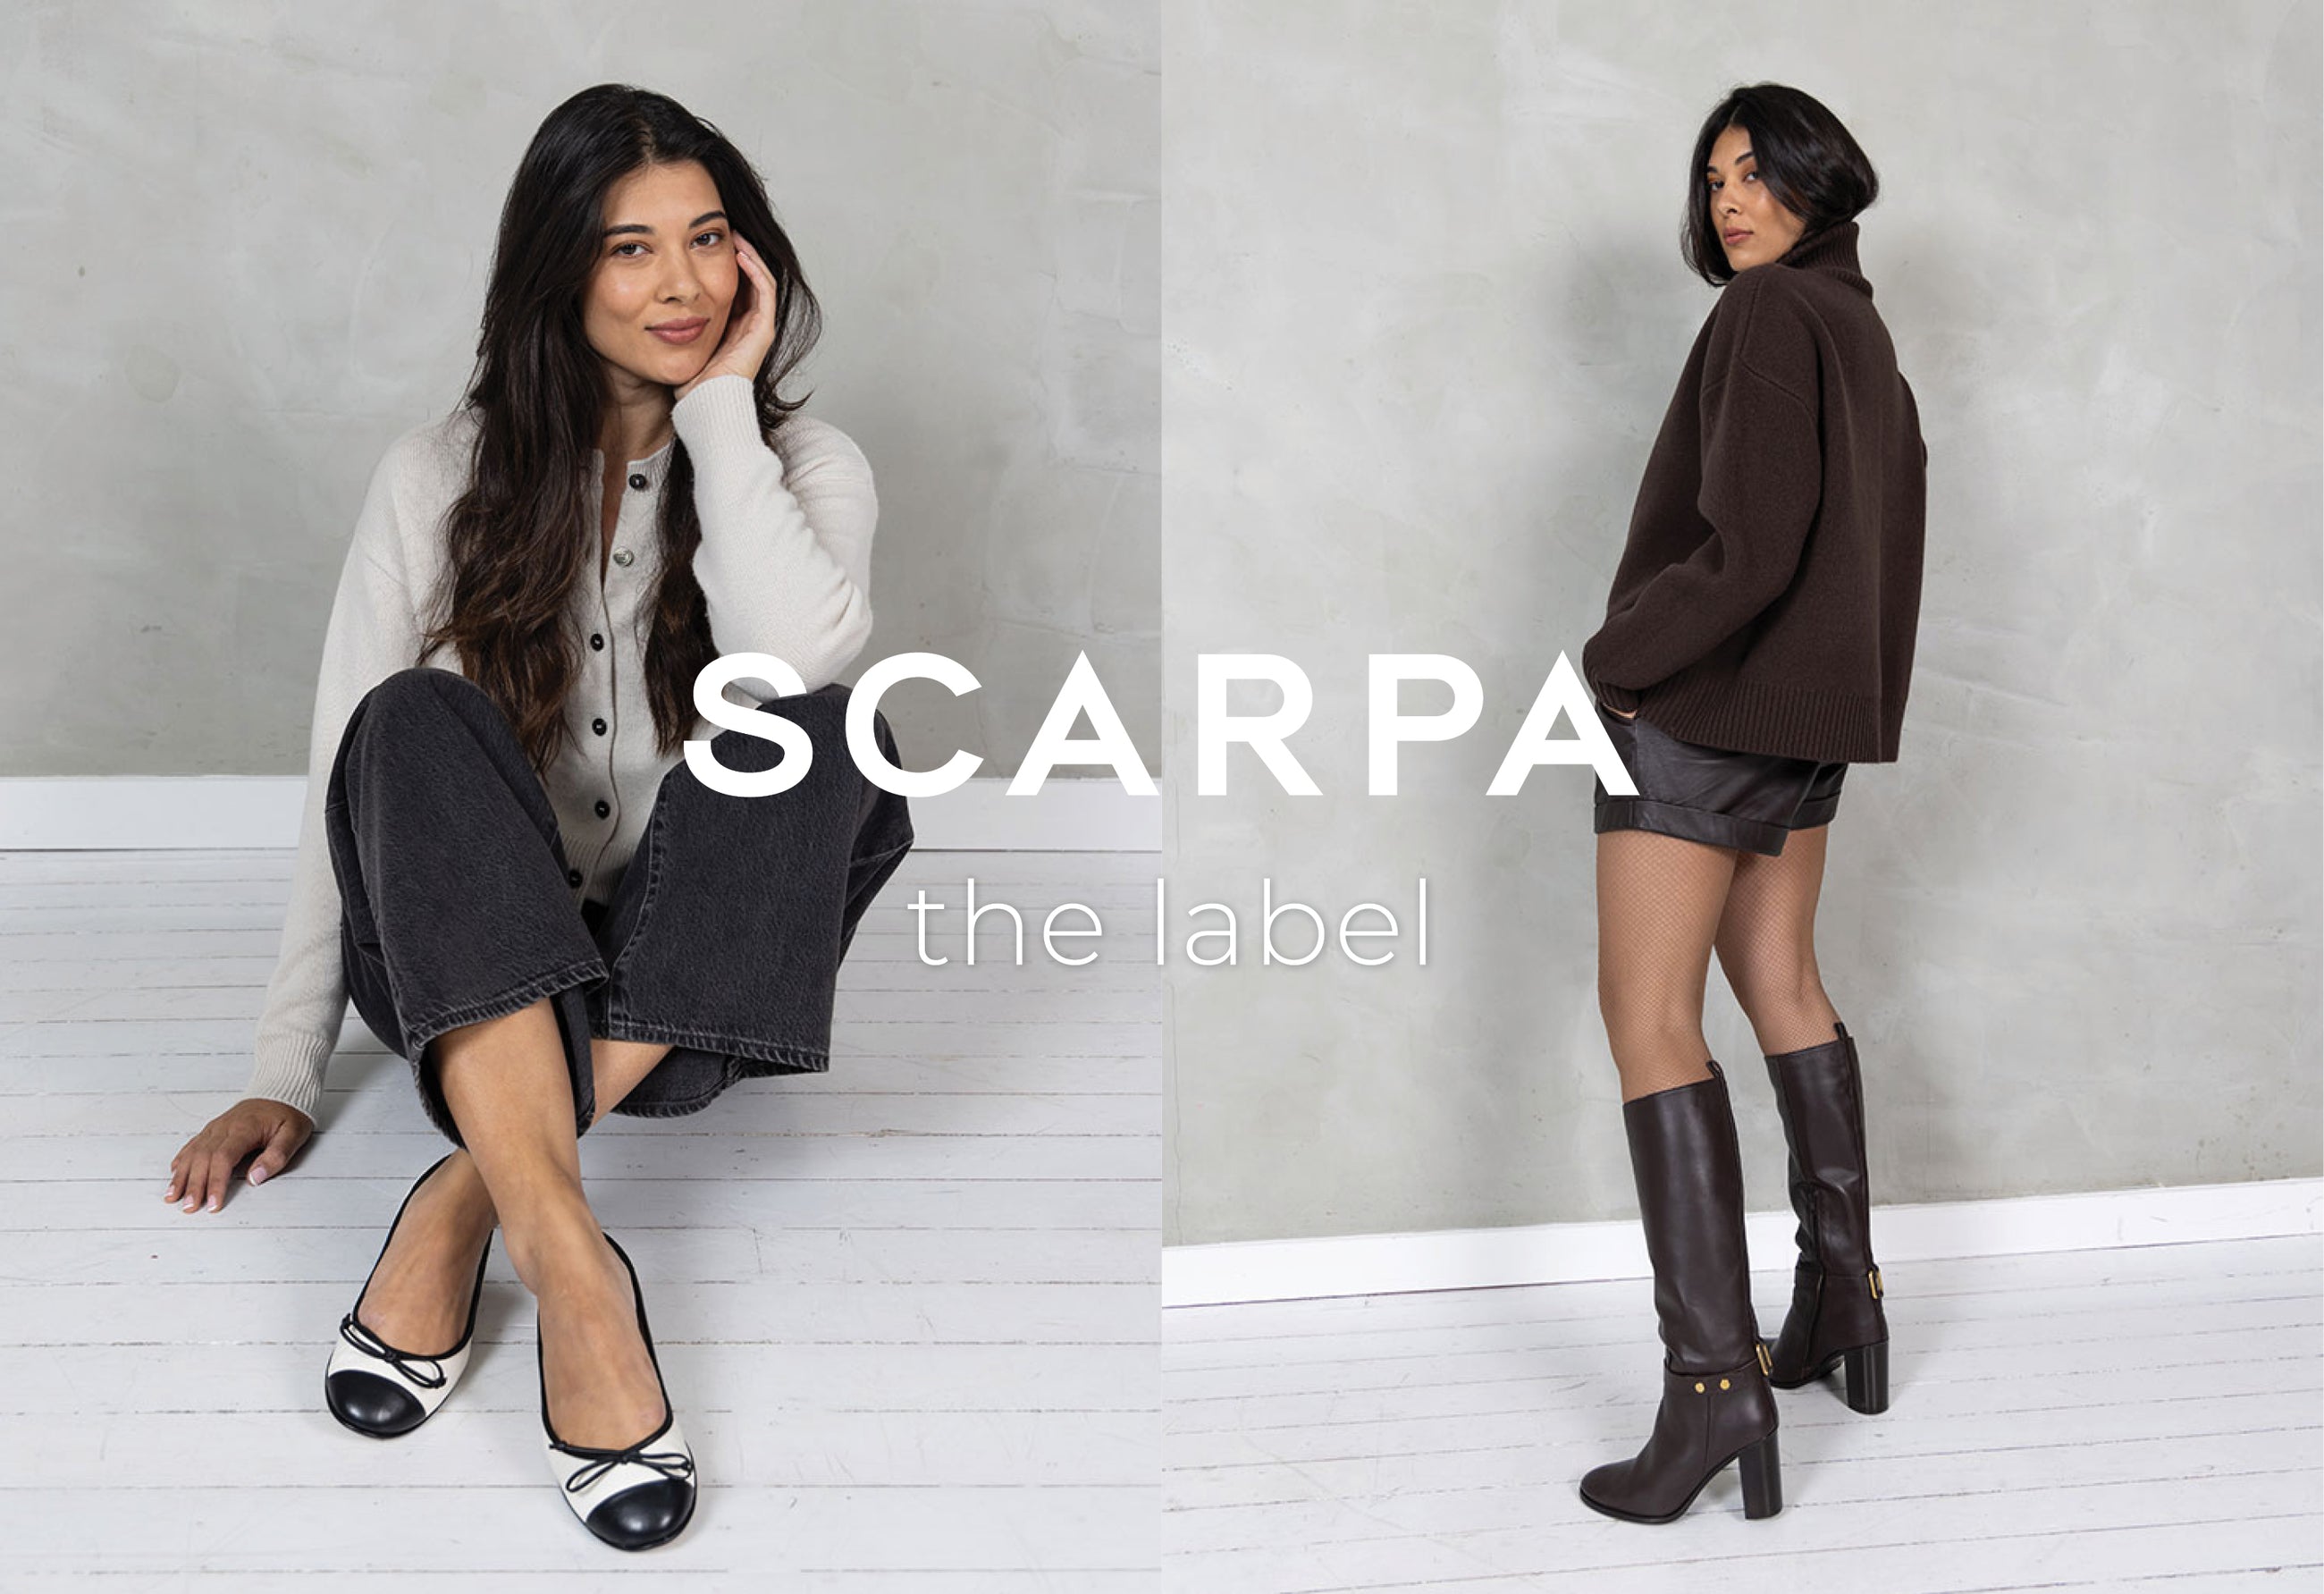 Scarpa the label